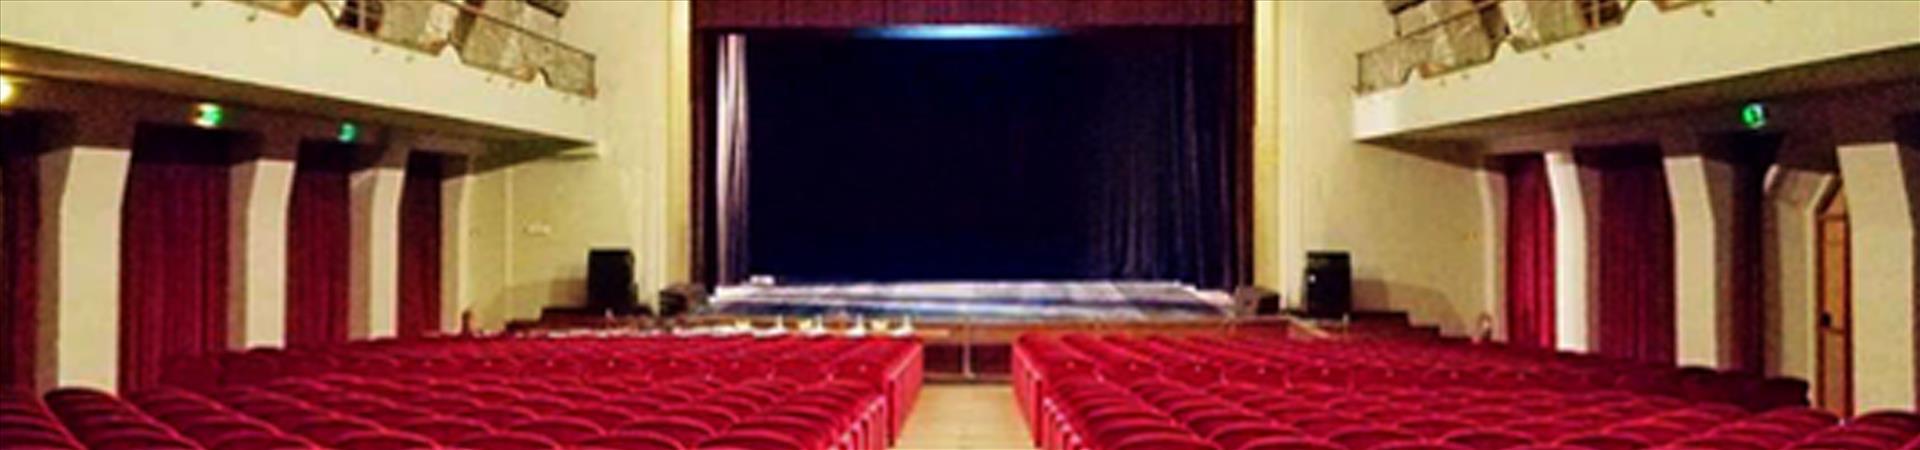 Teatro Augusteo_interno